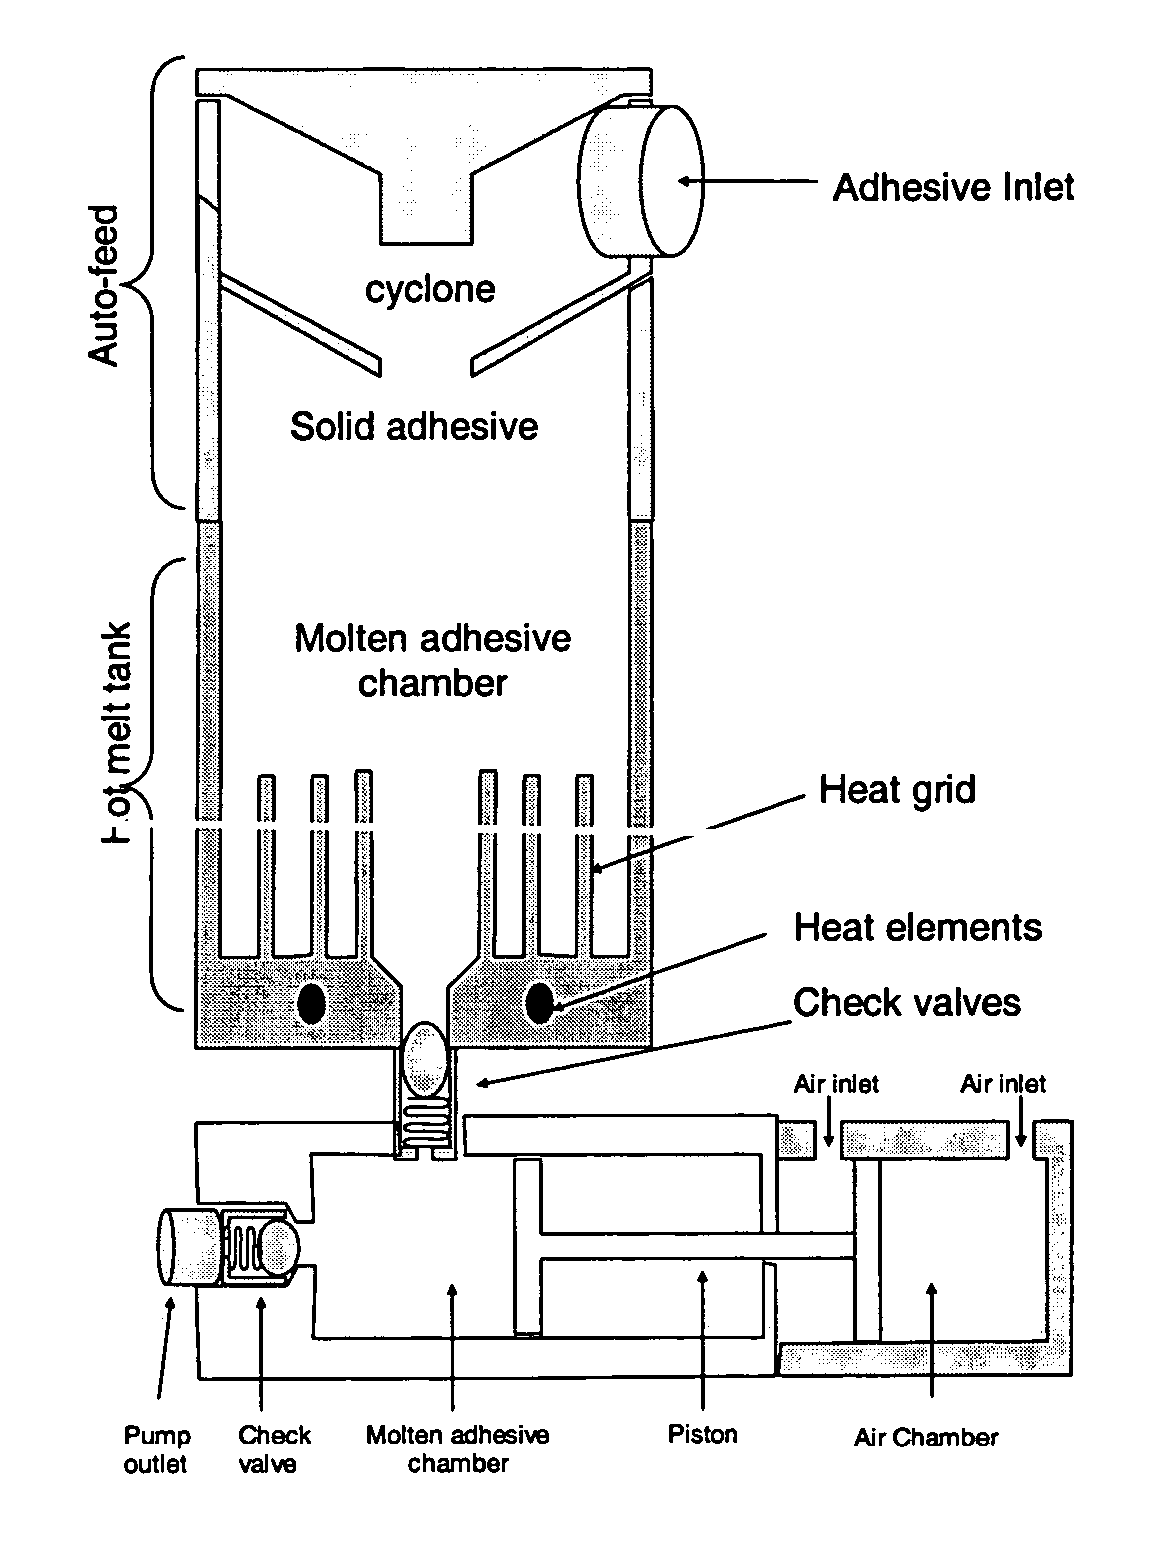 System for dispensing viscous liquids